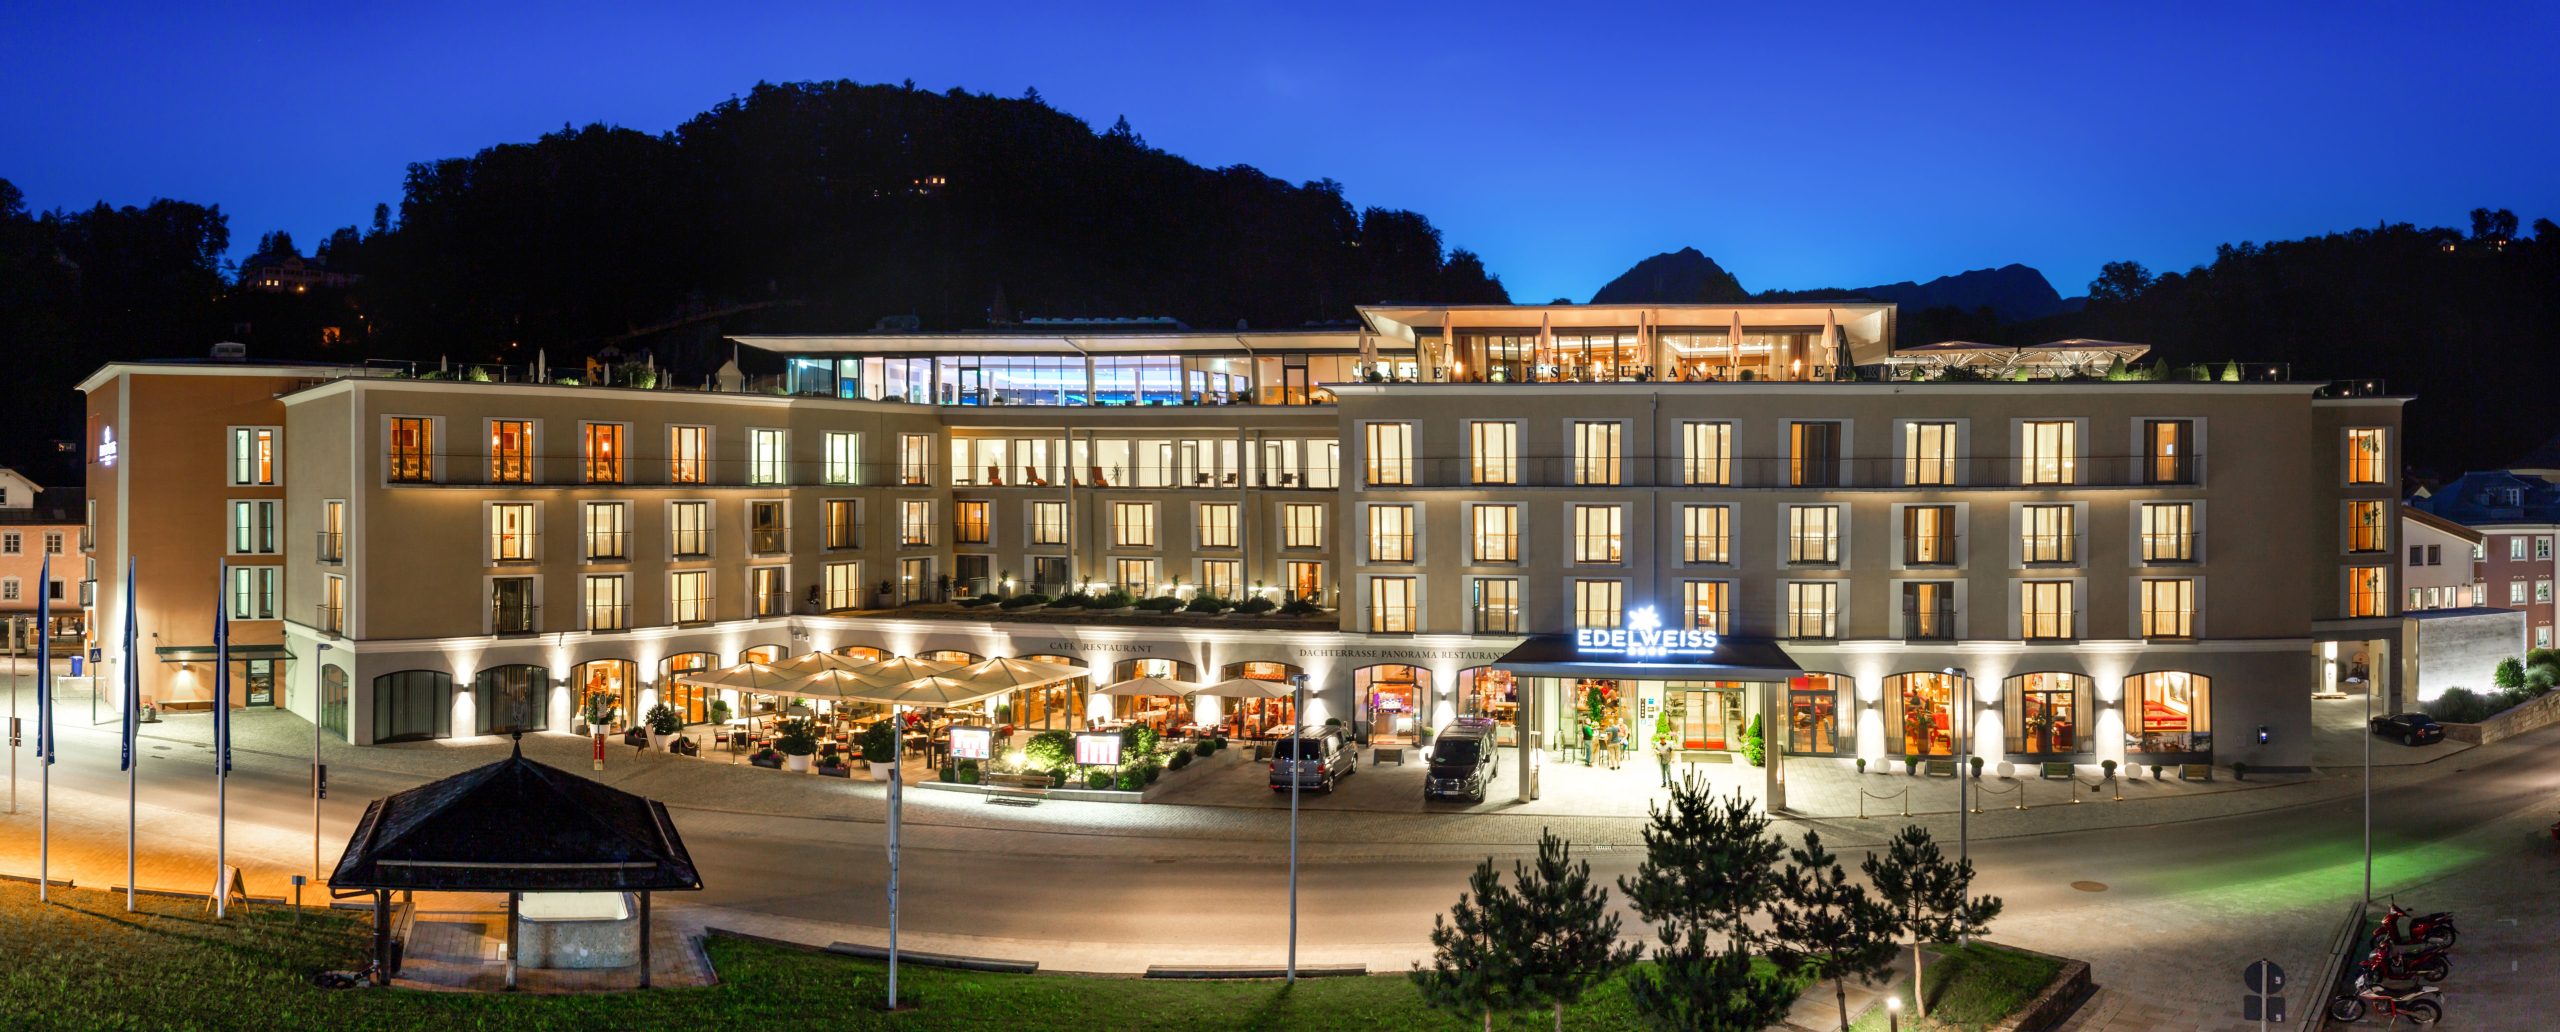 Abendpanorama © Hotel Edelweiss Berchtesgaden